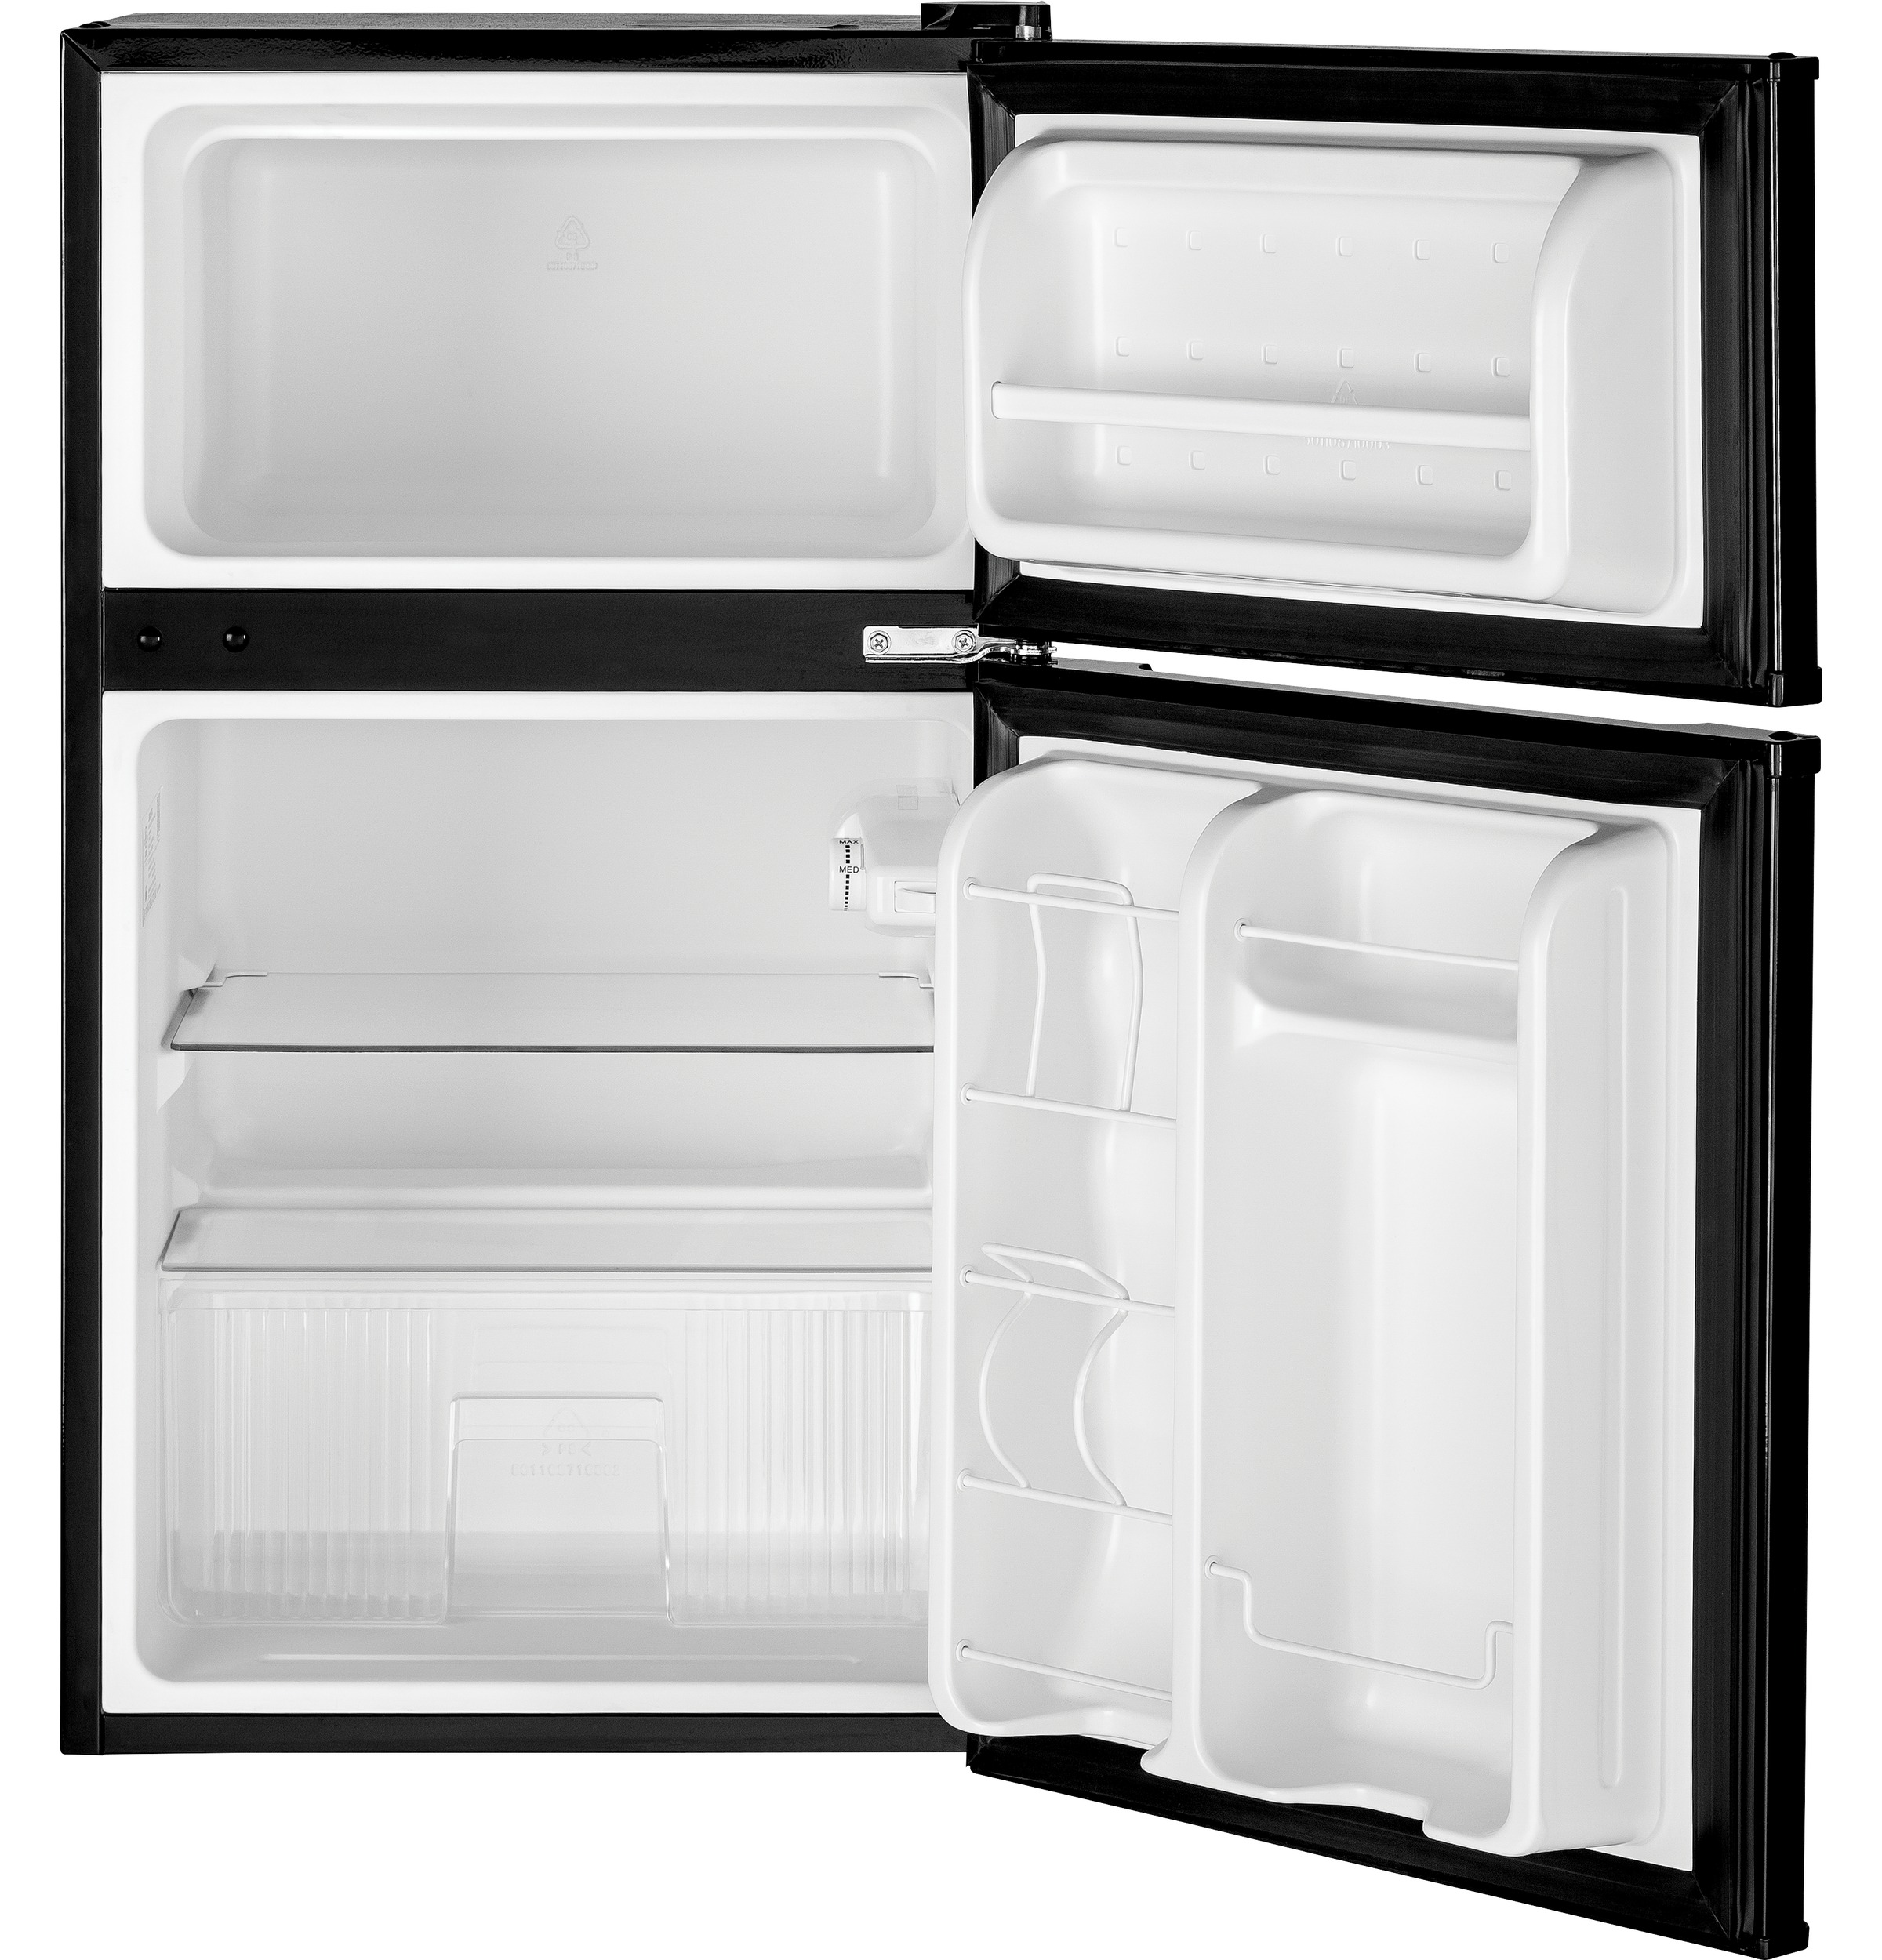 Ge Gde03gk 19" Wide 3.1 Cu. Ft. Energy Star Rated Freestanding Refrigerator - Black - image 3 of 4